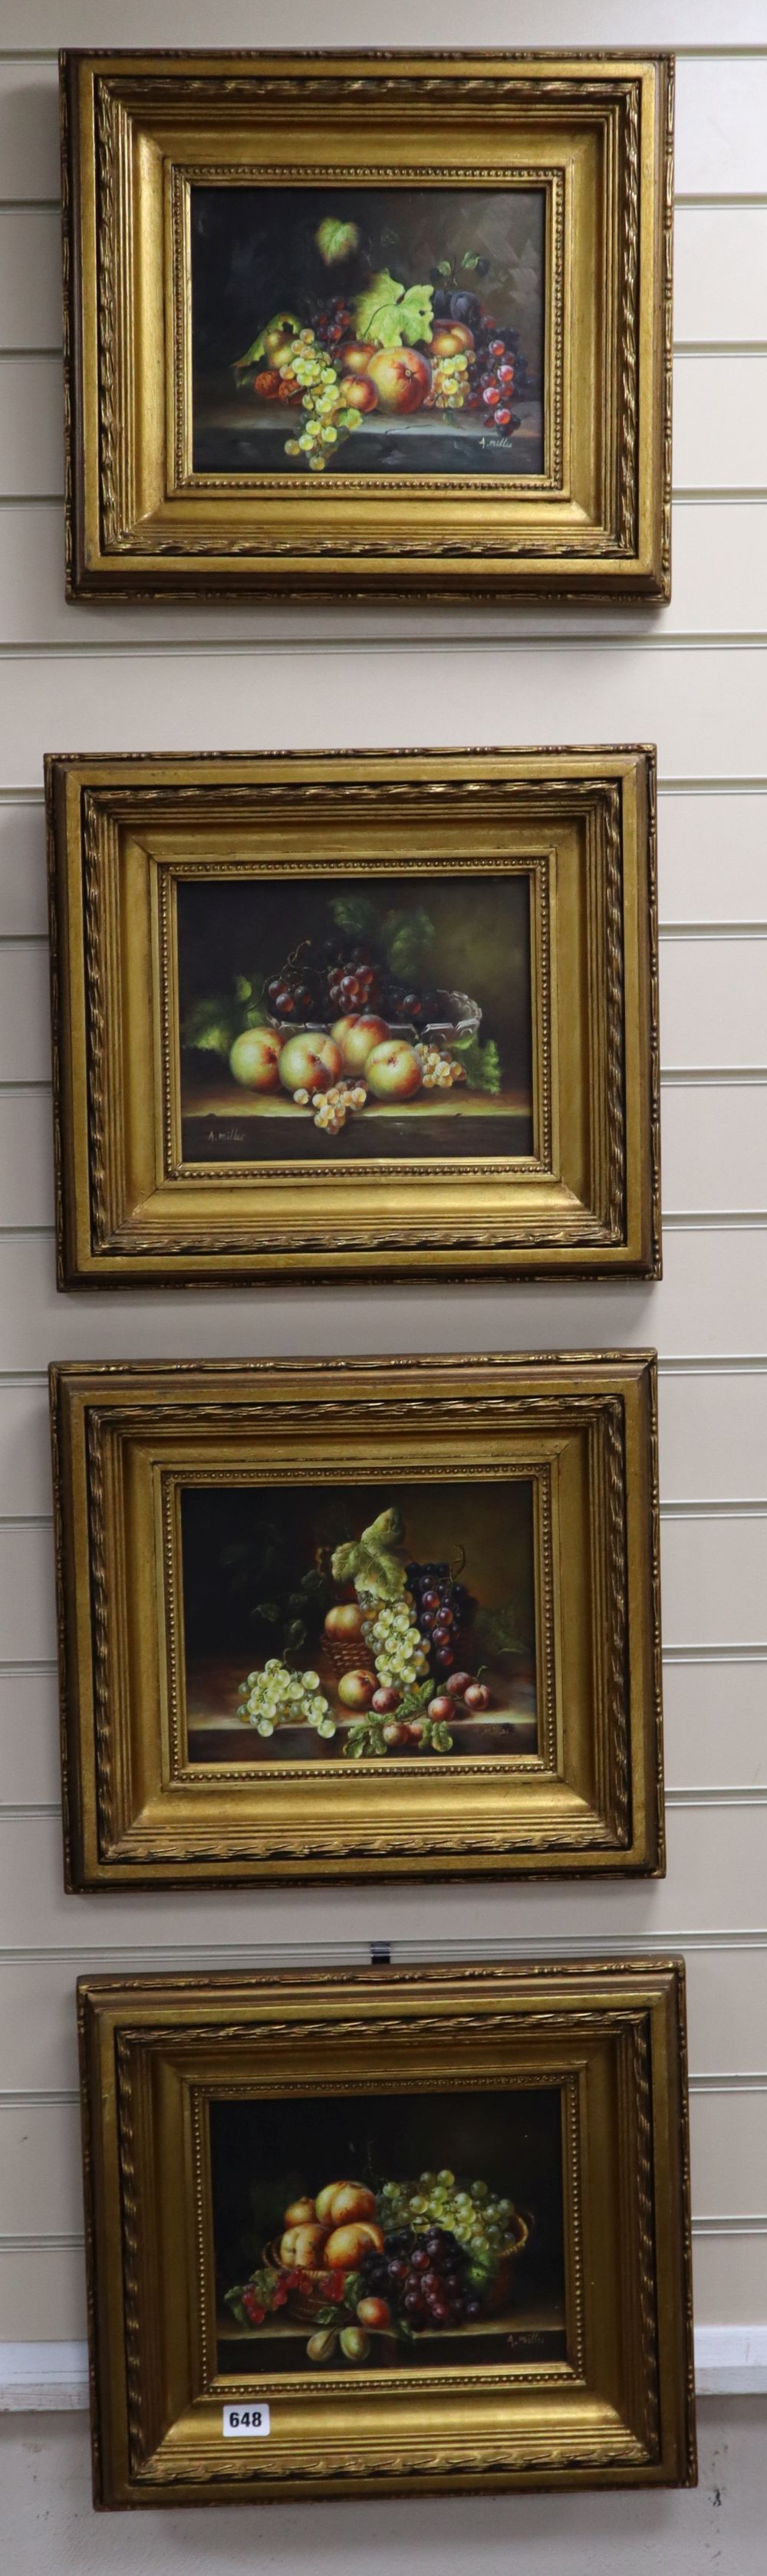 A. Miller, four oils on board, Still lifes of fruit, 19 x 24cm